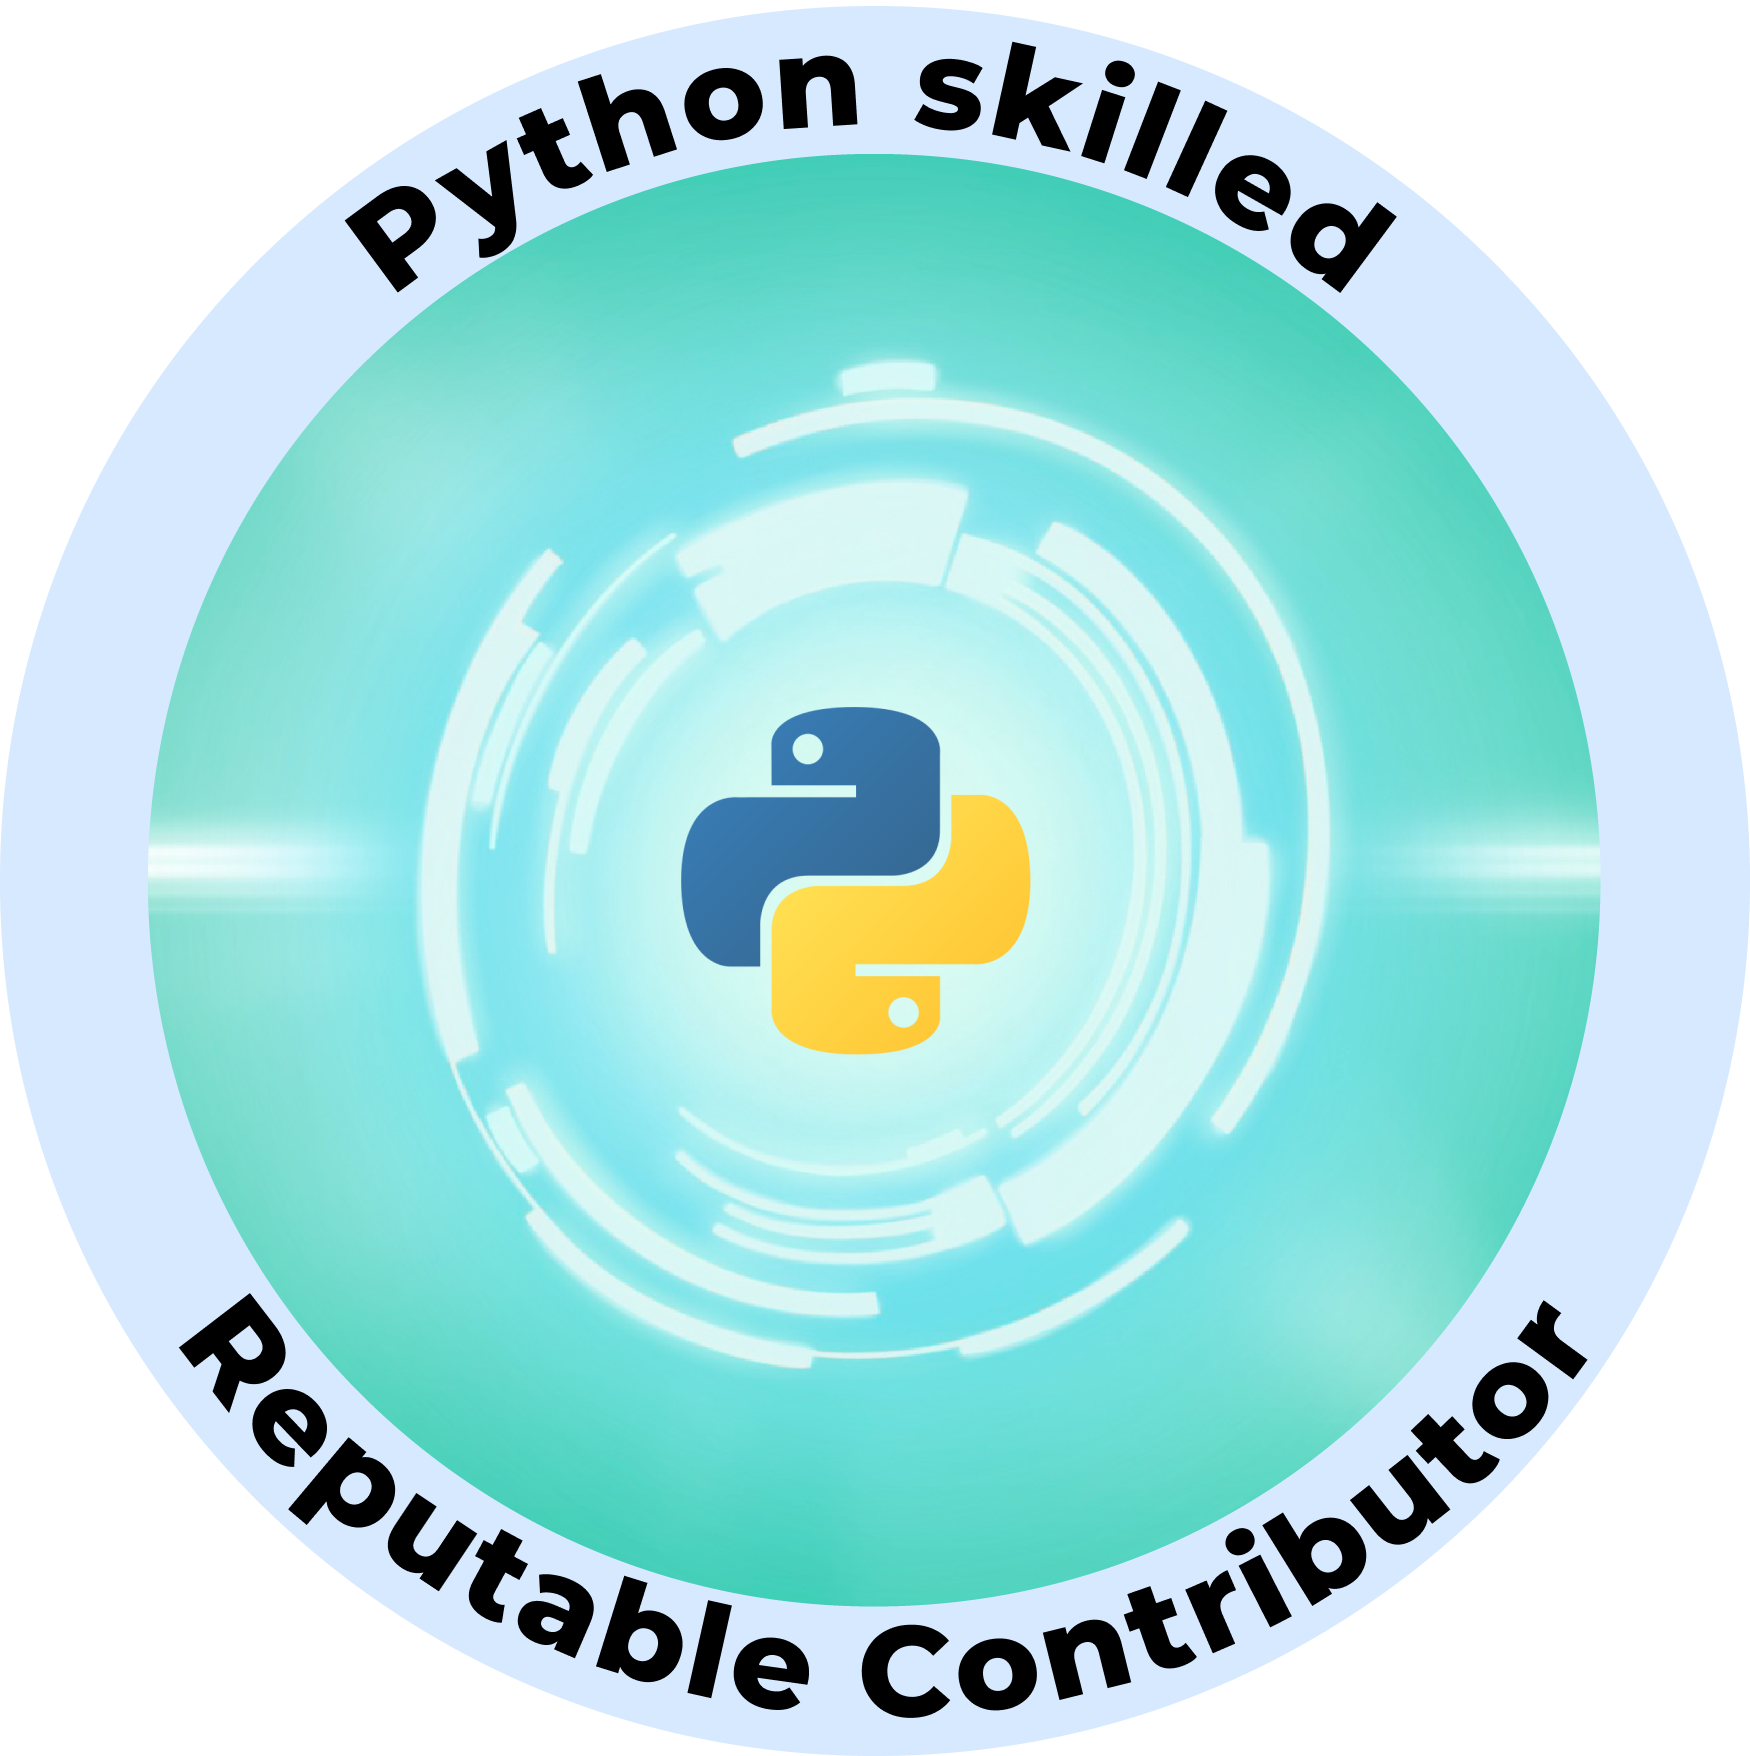 Web3 Badge | Reputable Python Skilled Contributor logo